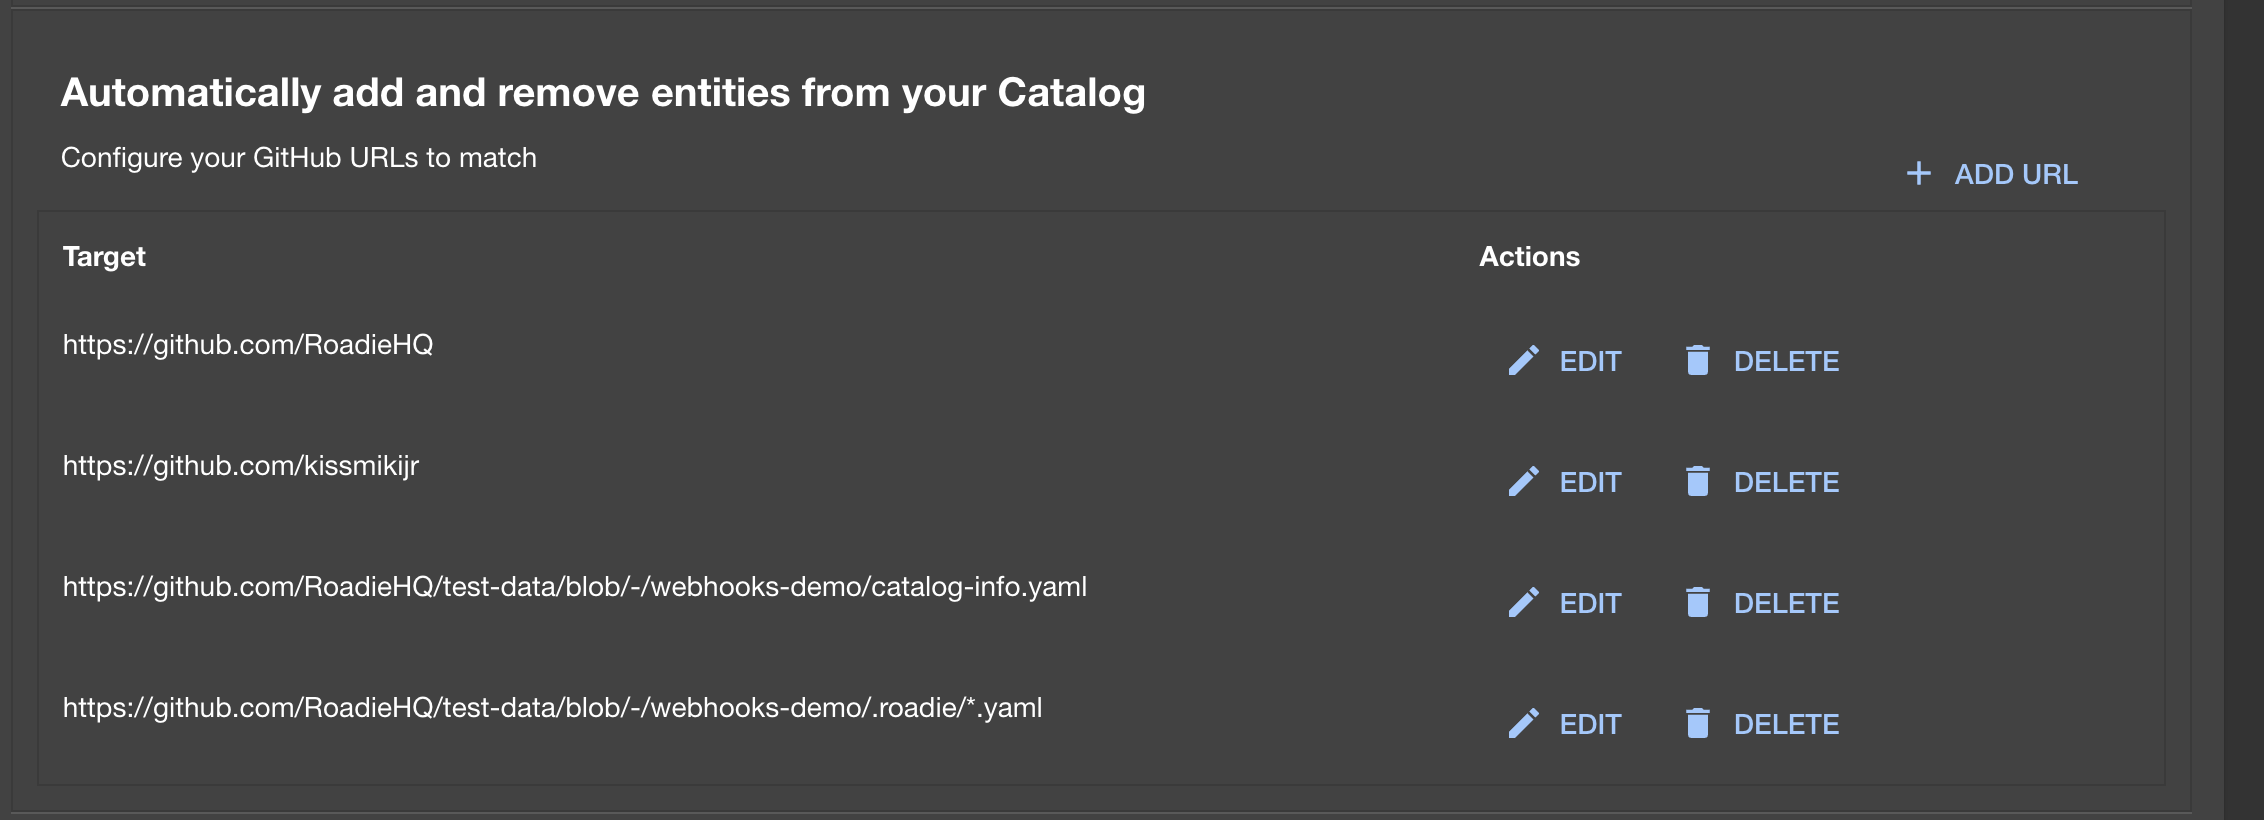 Screenshot: Catalog settings enabling webhooks 